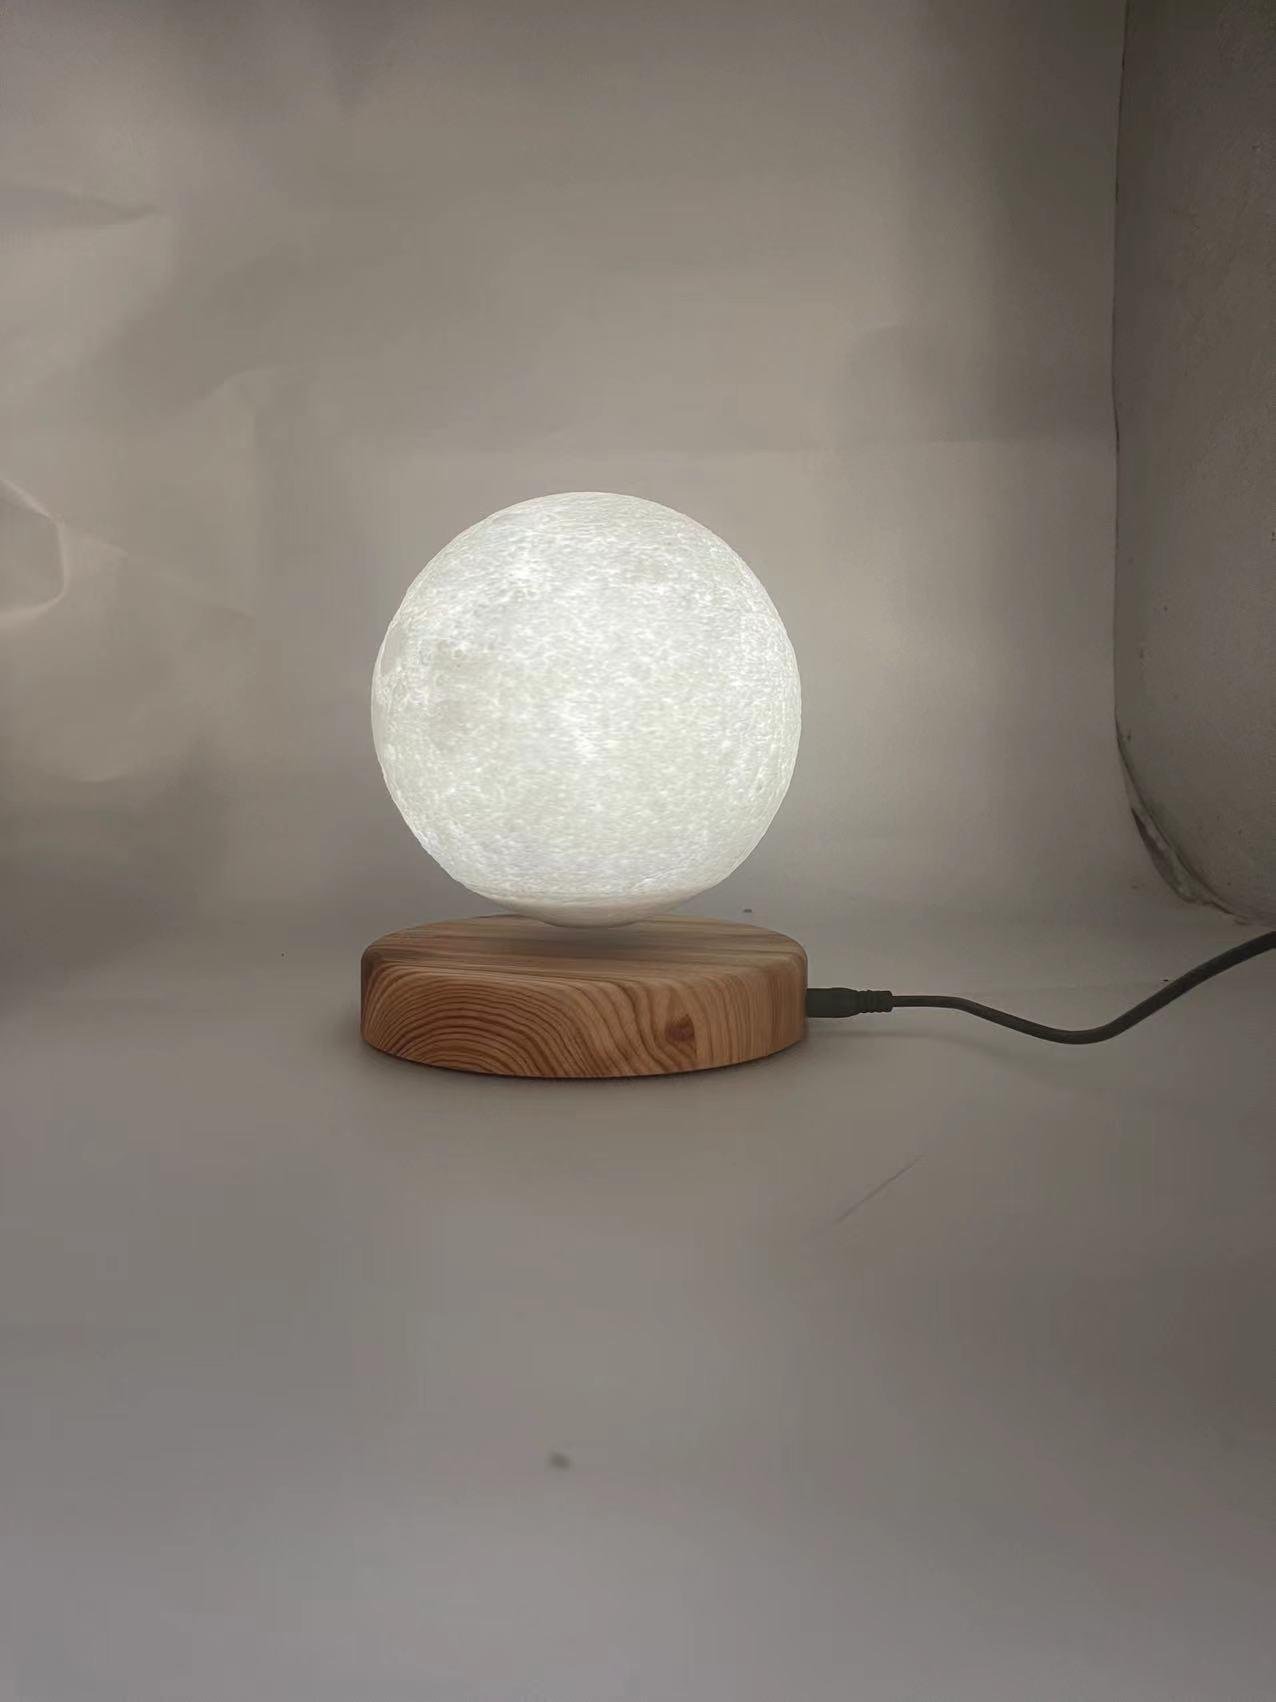 360 spinning magnetic floating levitaiton desk moon night light  2